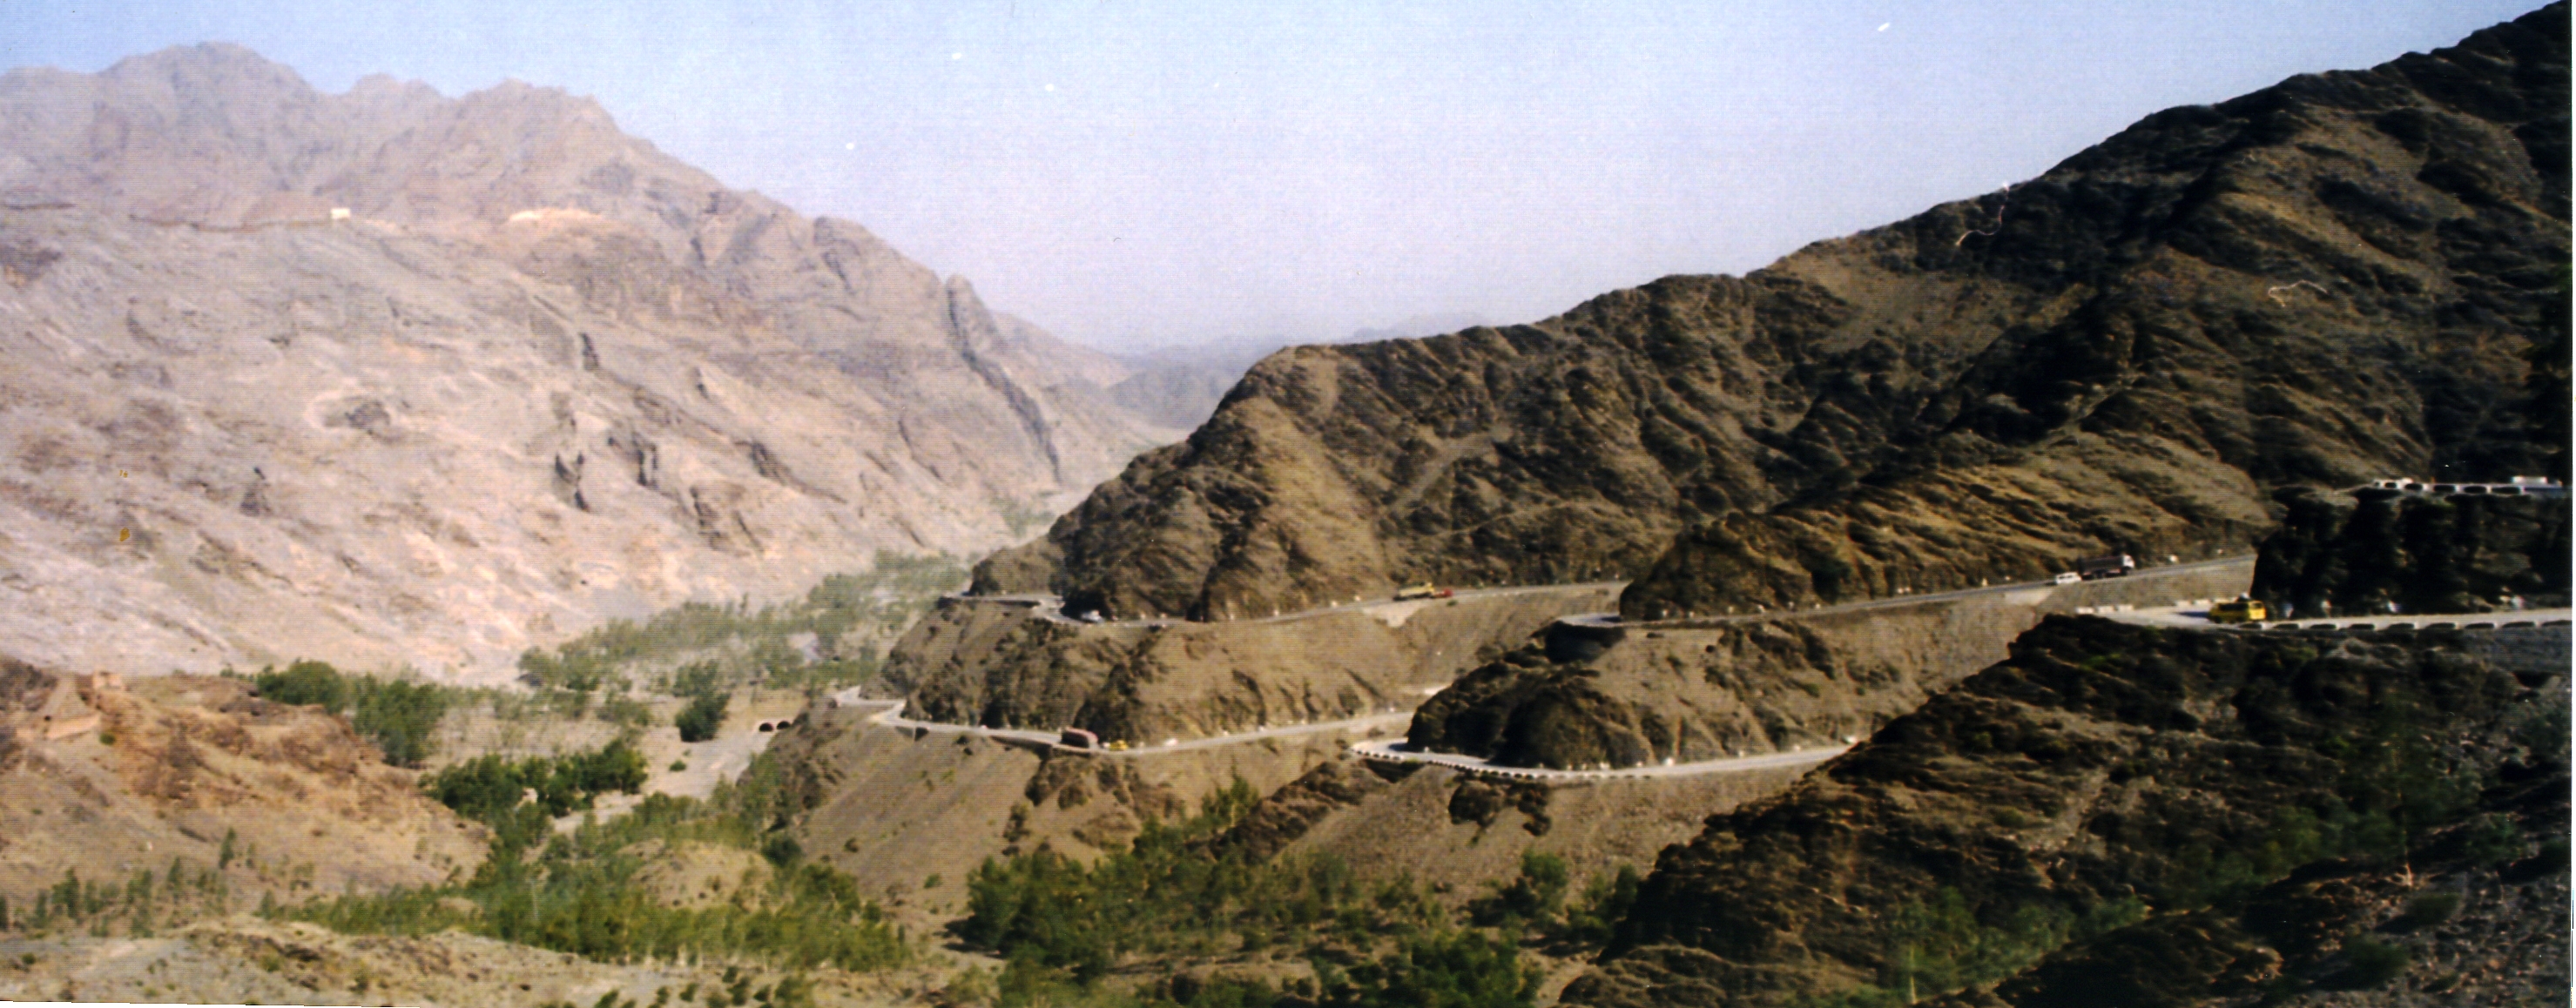 Khyber Pass (Photo: maailmajapaikat.wordpress.com)